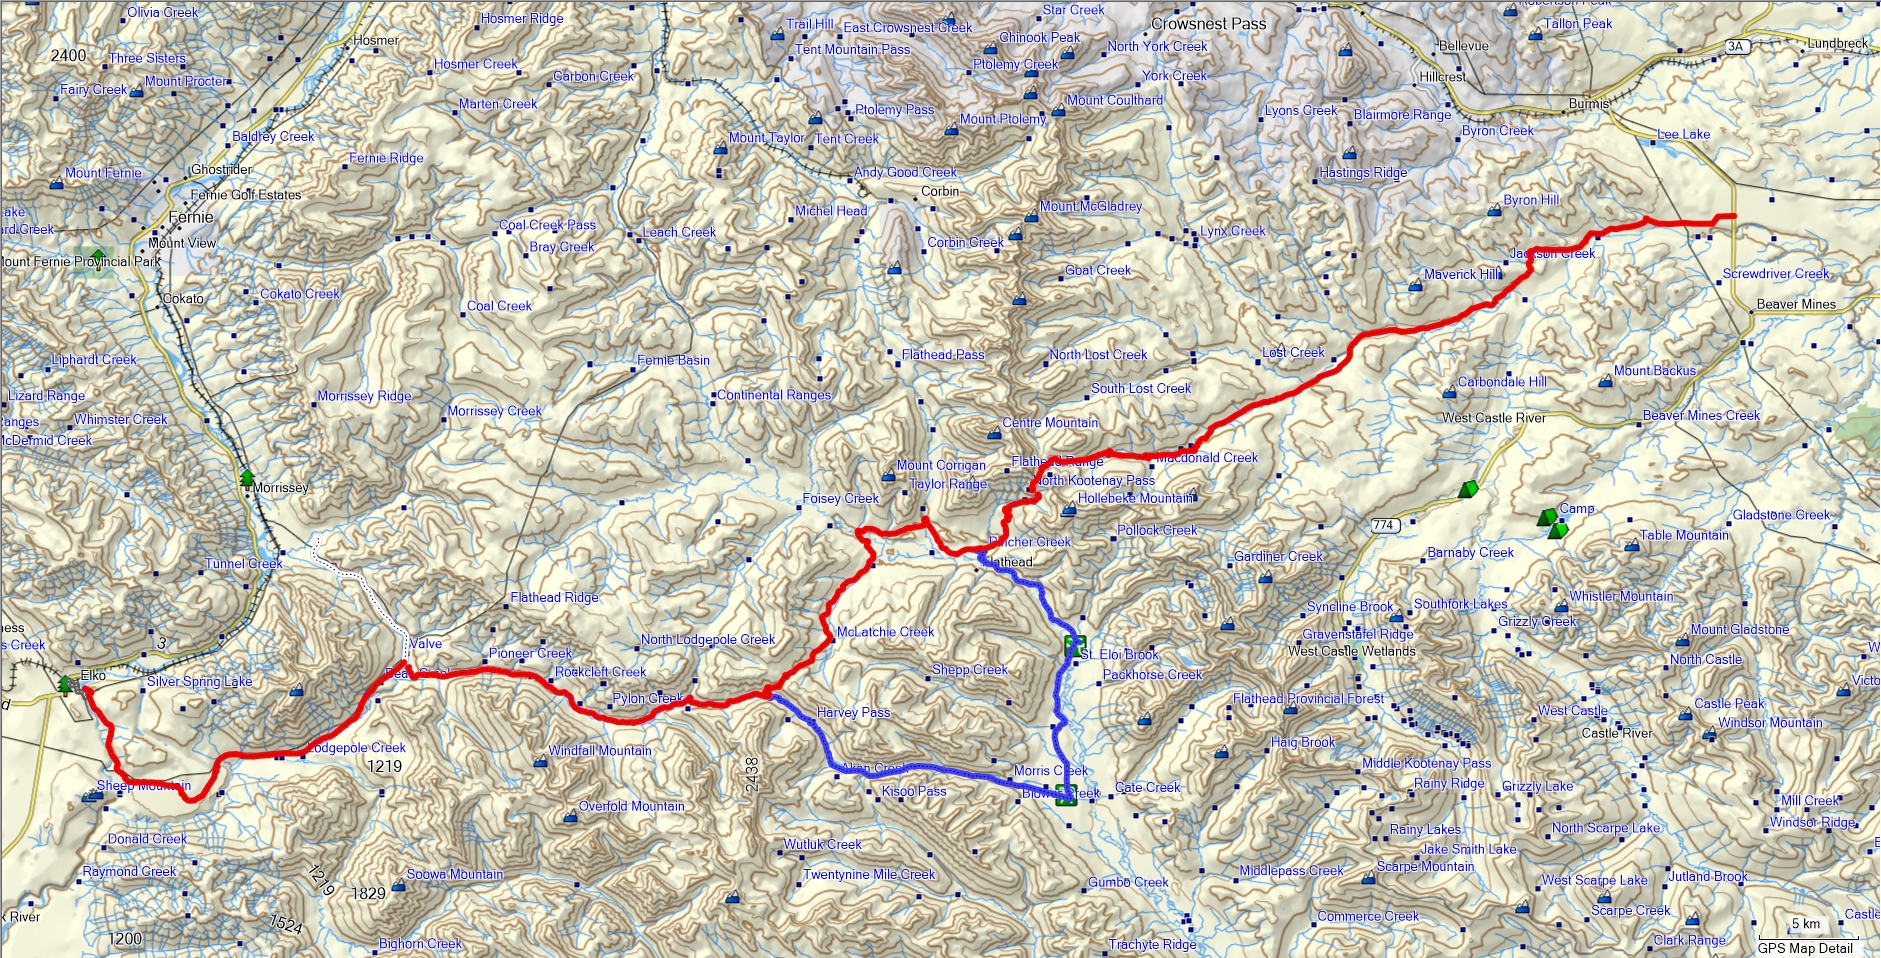 rockies rail route